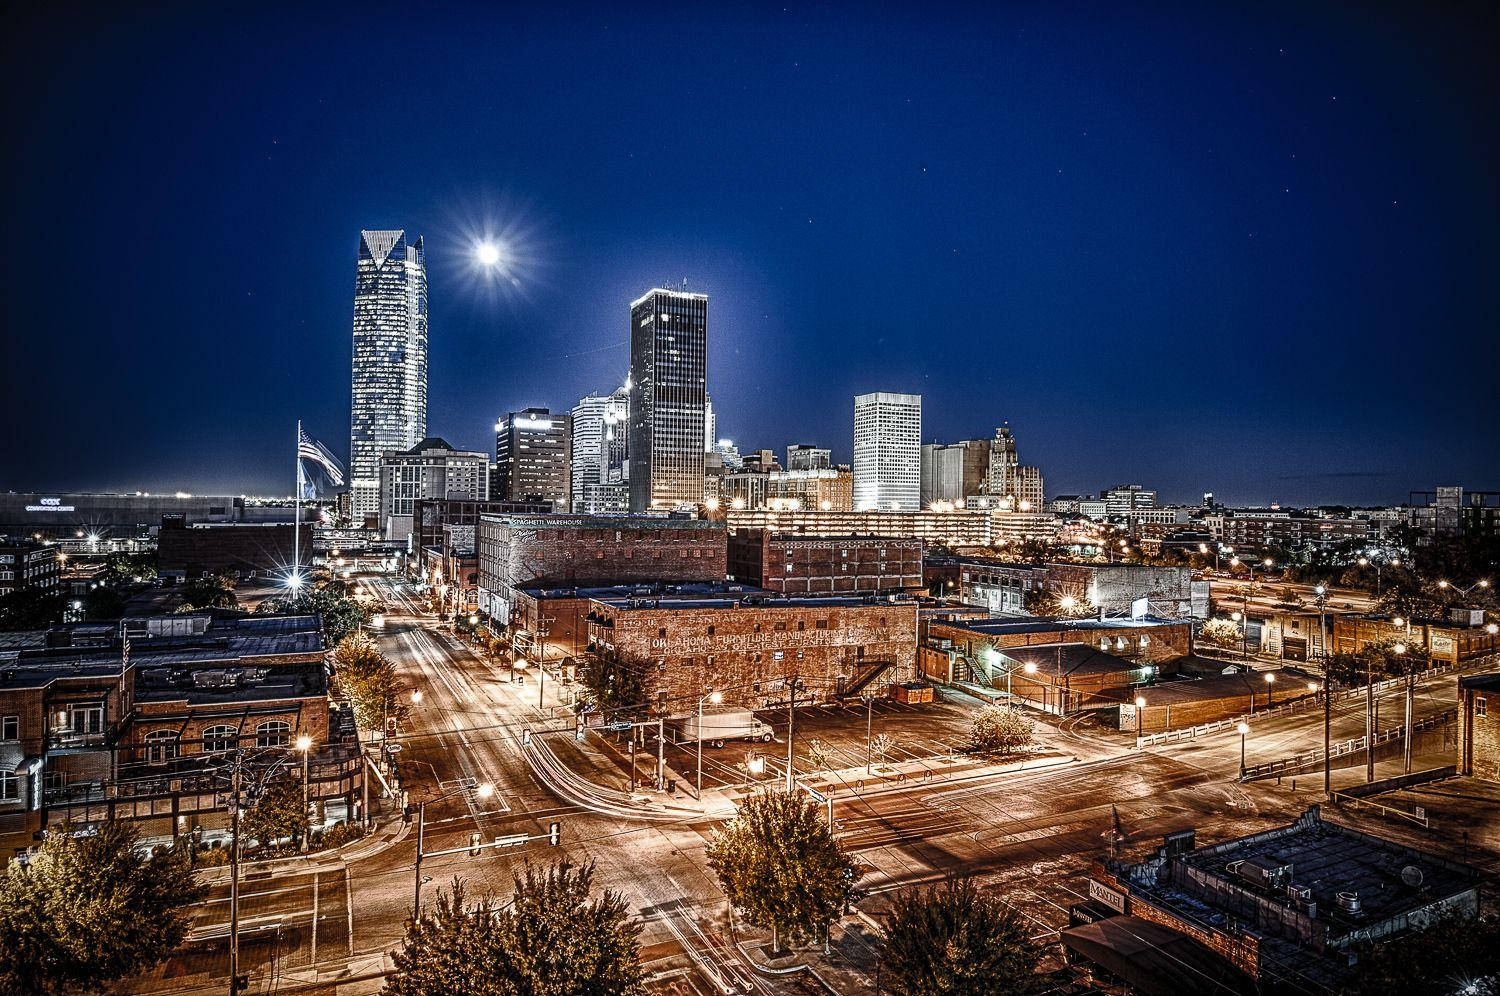 Illuminating Iconic Oklahoma Cityscape